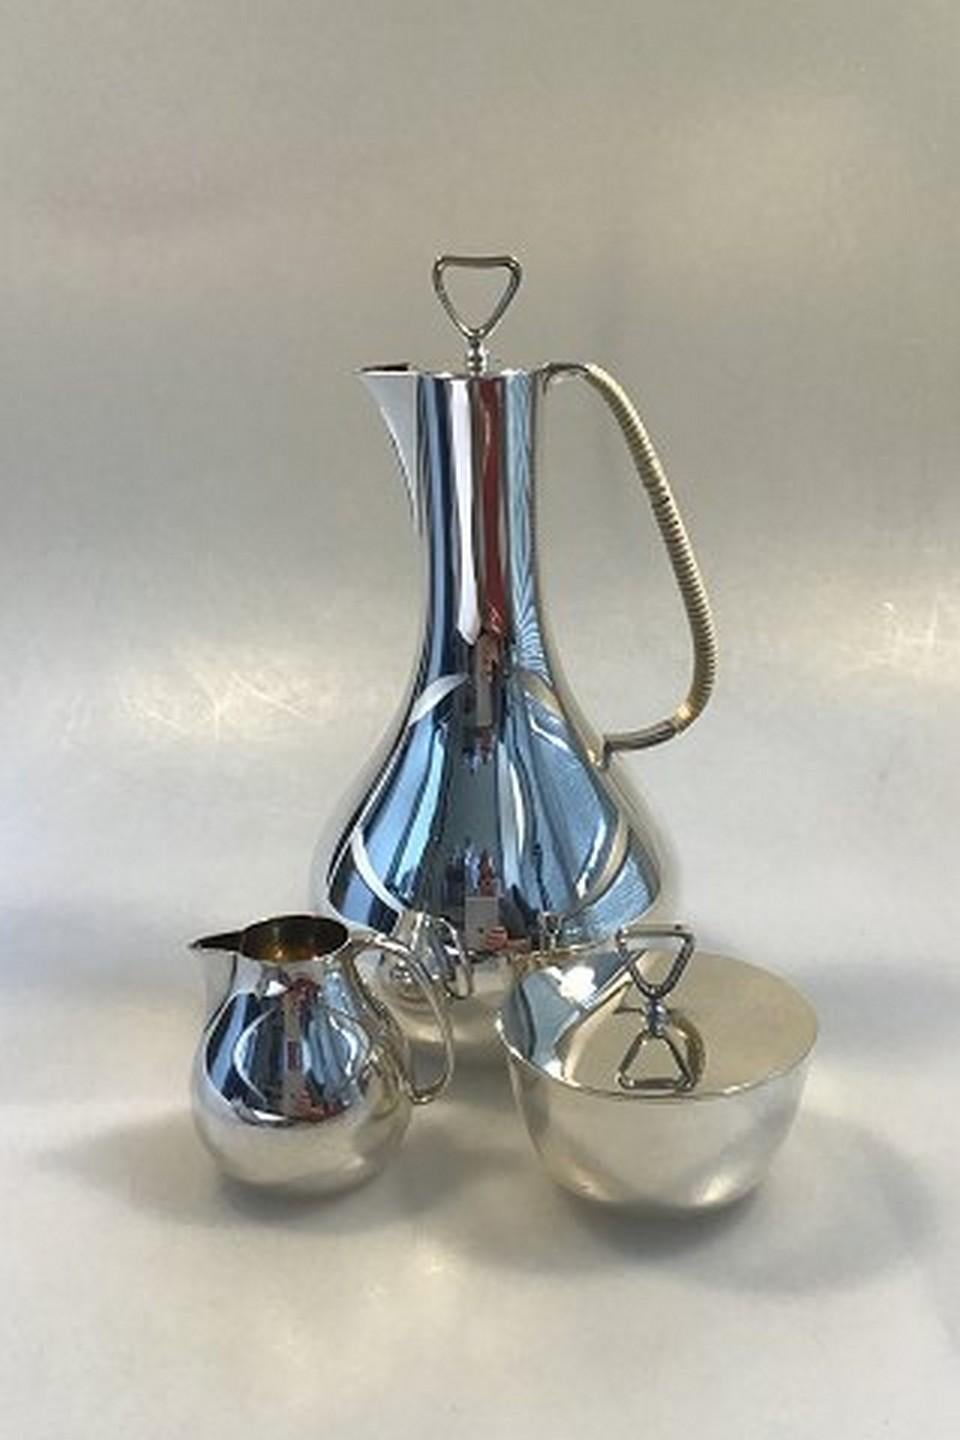 Georg Jensen sterling silver coffee set no 1015 Sigvard Bernadotte 
Measures Coffee pot H 23.5 cm (9 1/4 in) Sugar bowl H 7 cm(2 3/4 in), creamer H 7 cm(2 3/4 in)
Item no.: 417421.